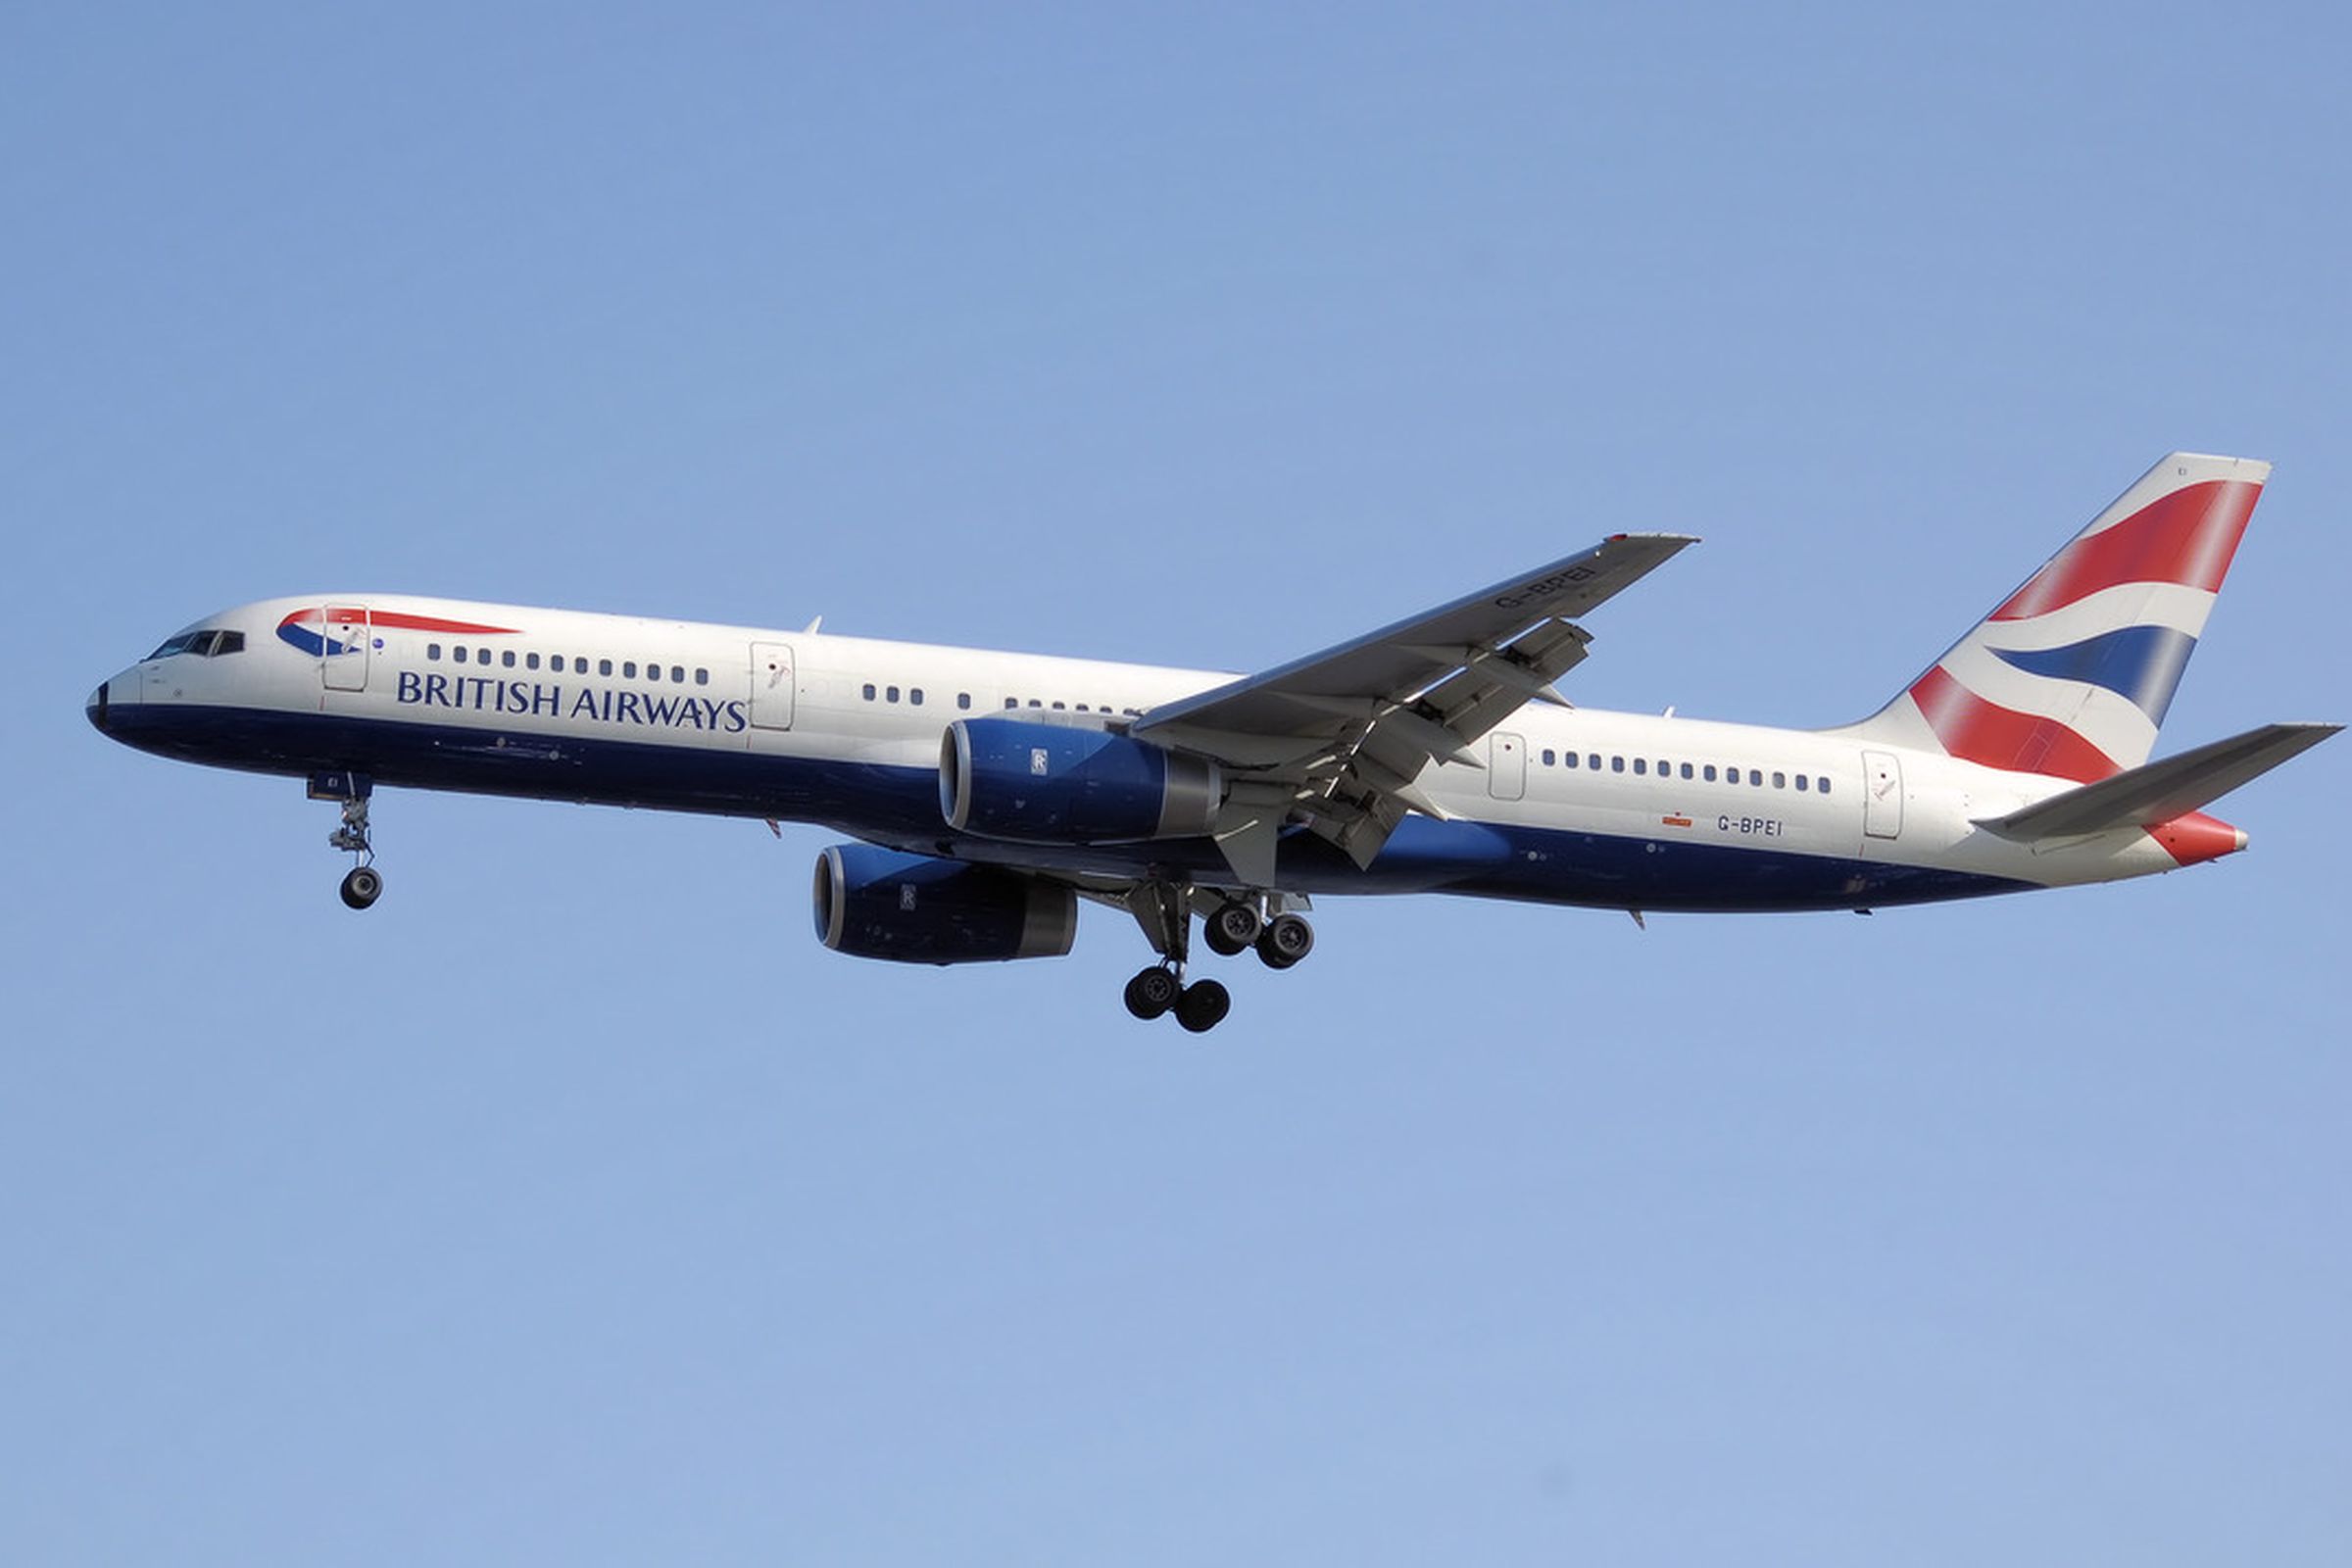 British Airways aircraft (public domain)